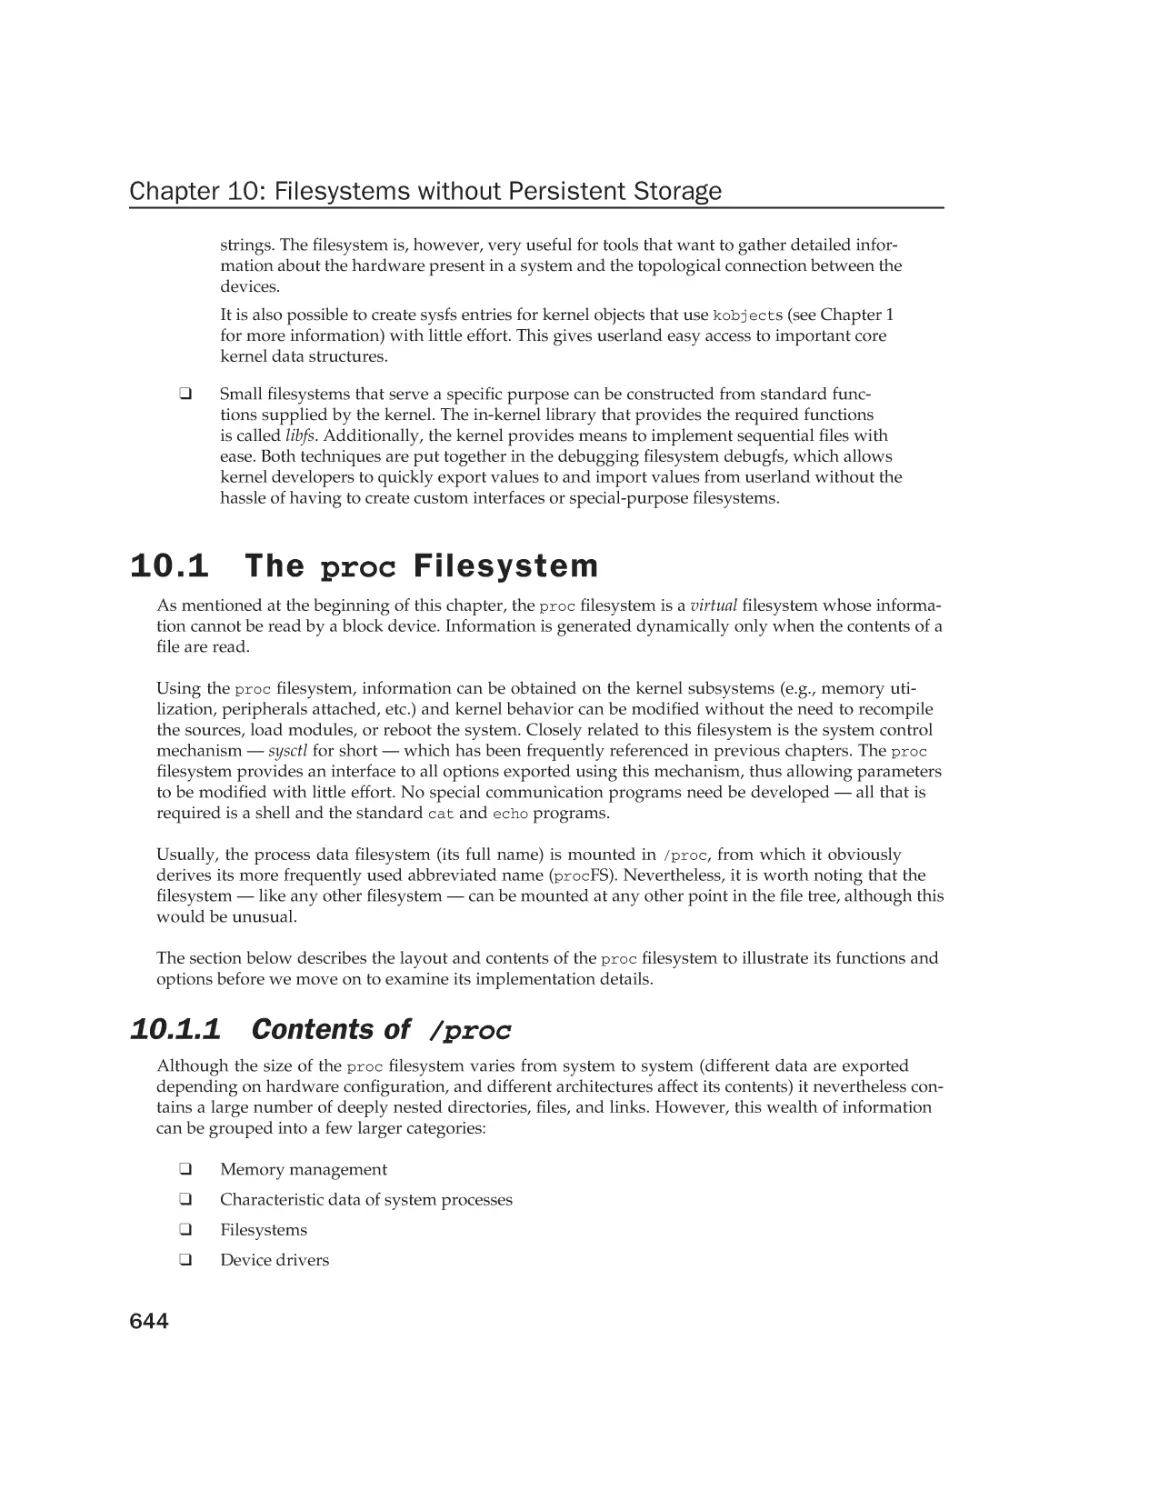 10.1 The proc Filesystem